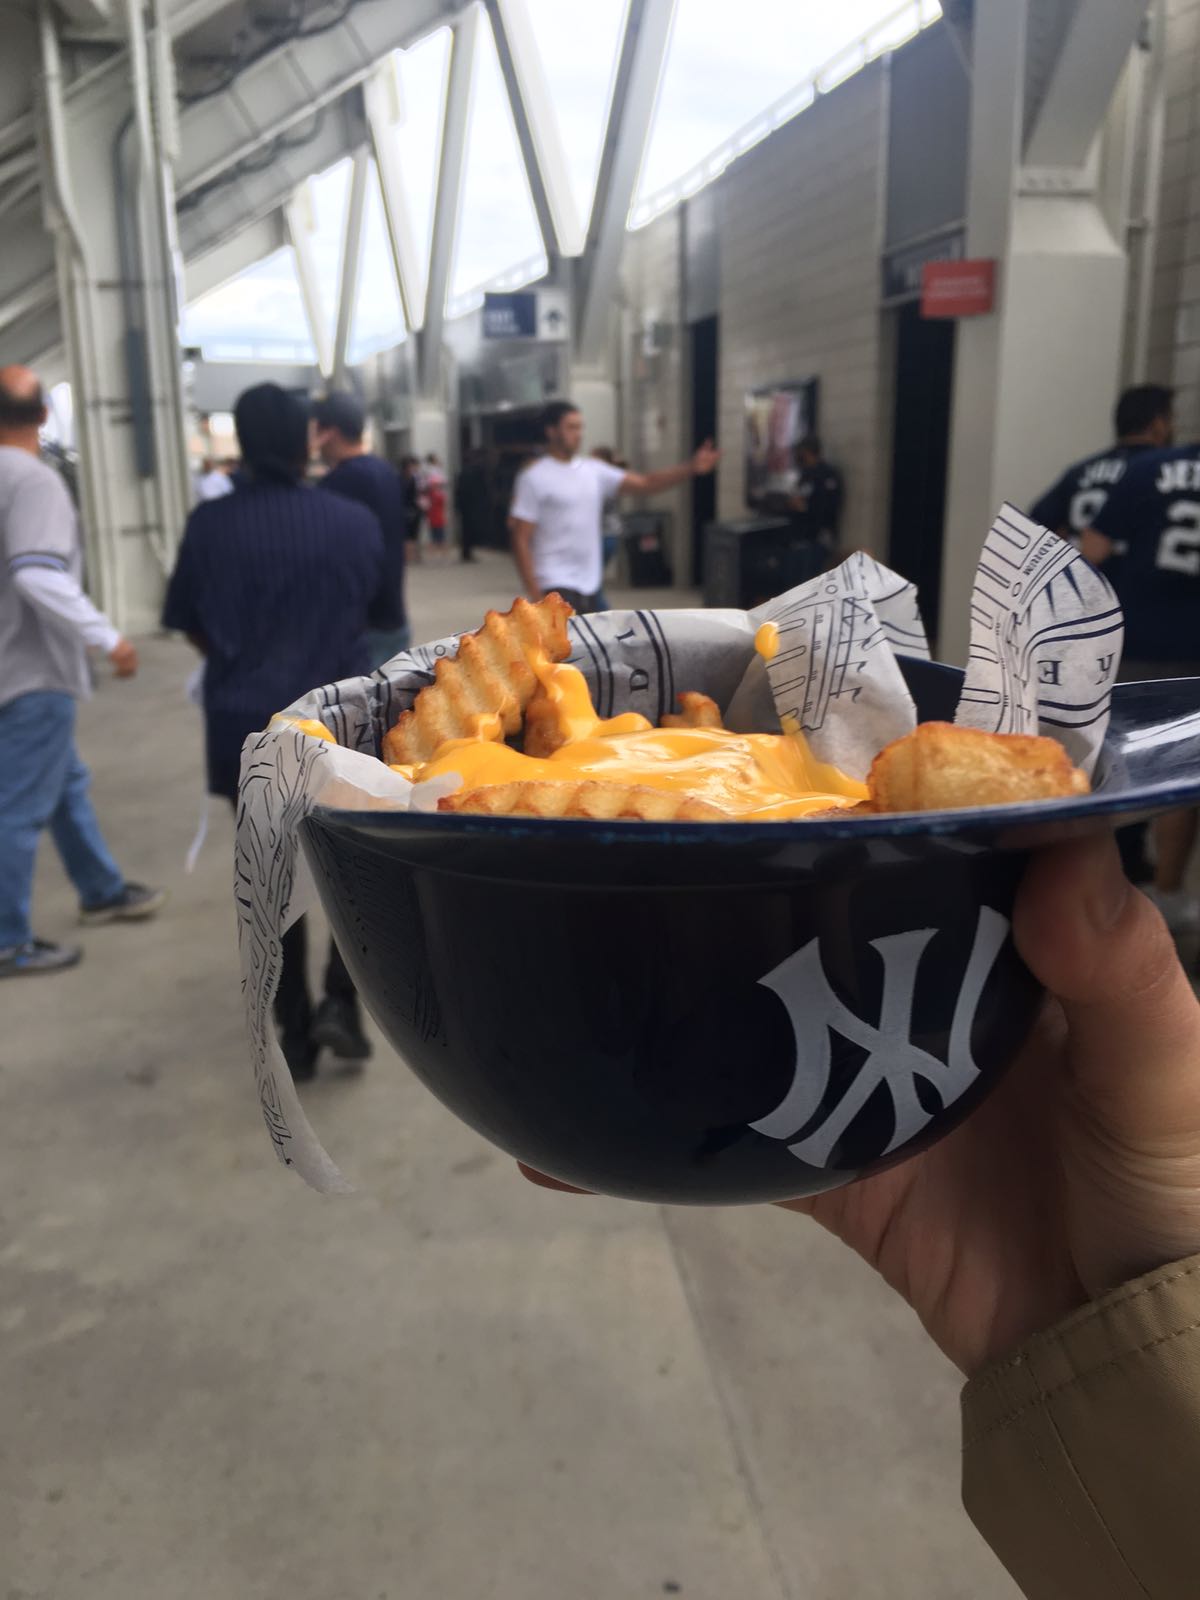 File:Food in the Yankee Stadium.jpg - Wikimedia Commons